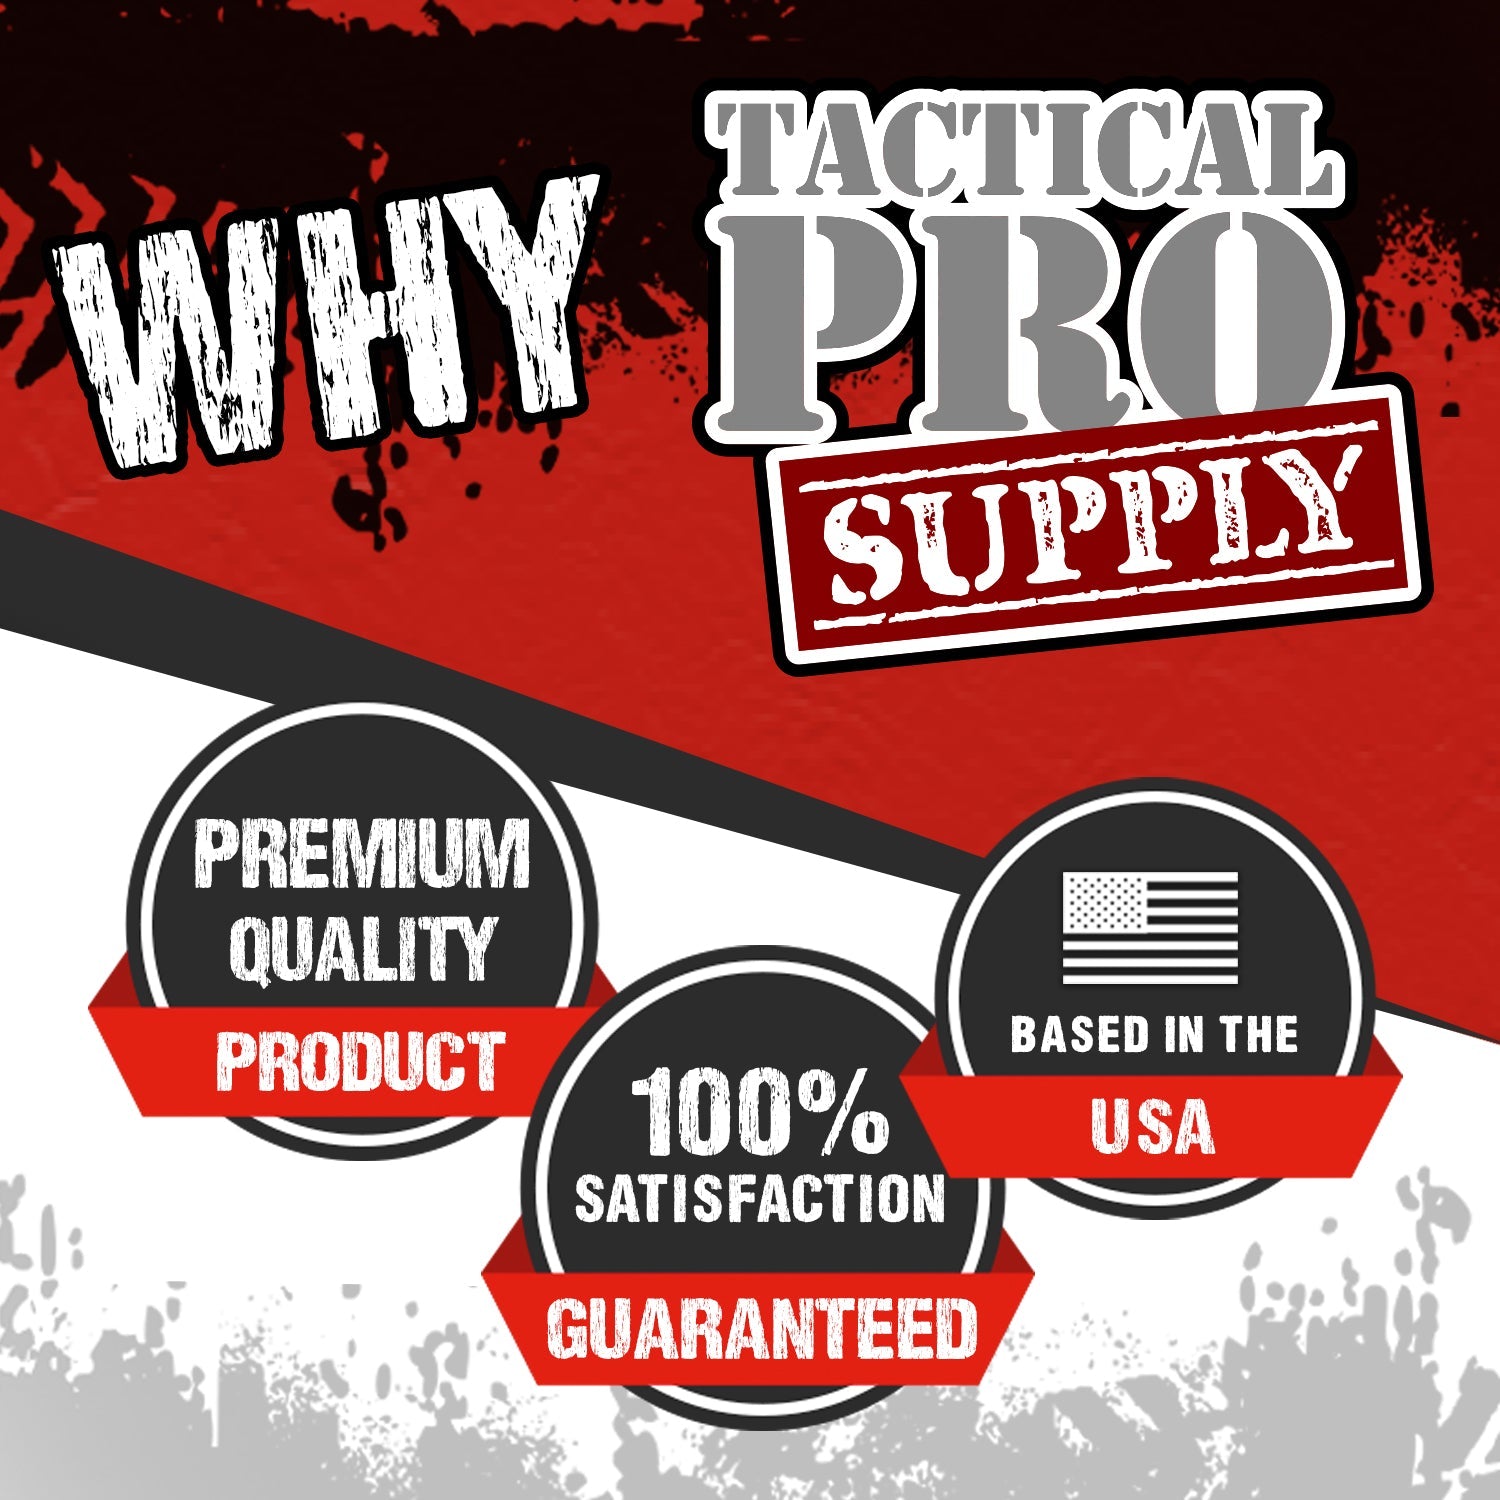 Identity Crisis - Tactical Pro Supply, LLC